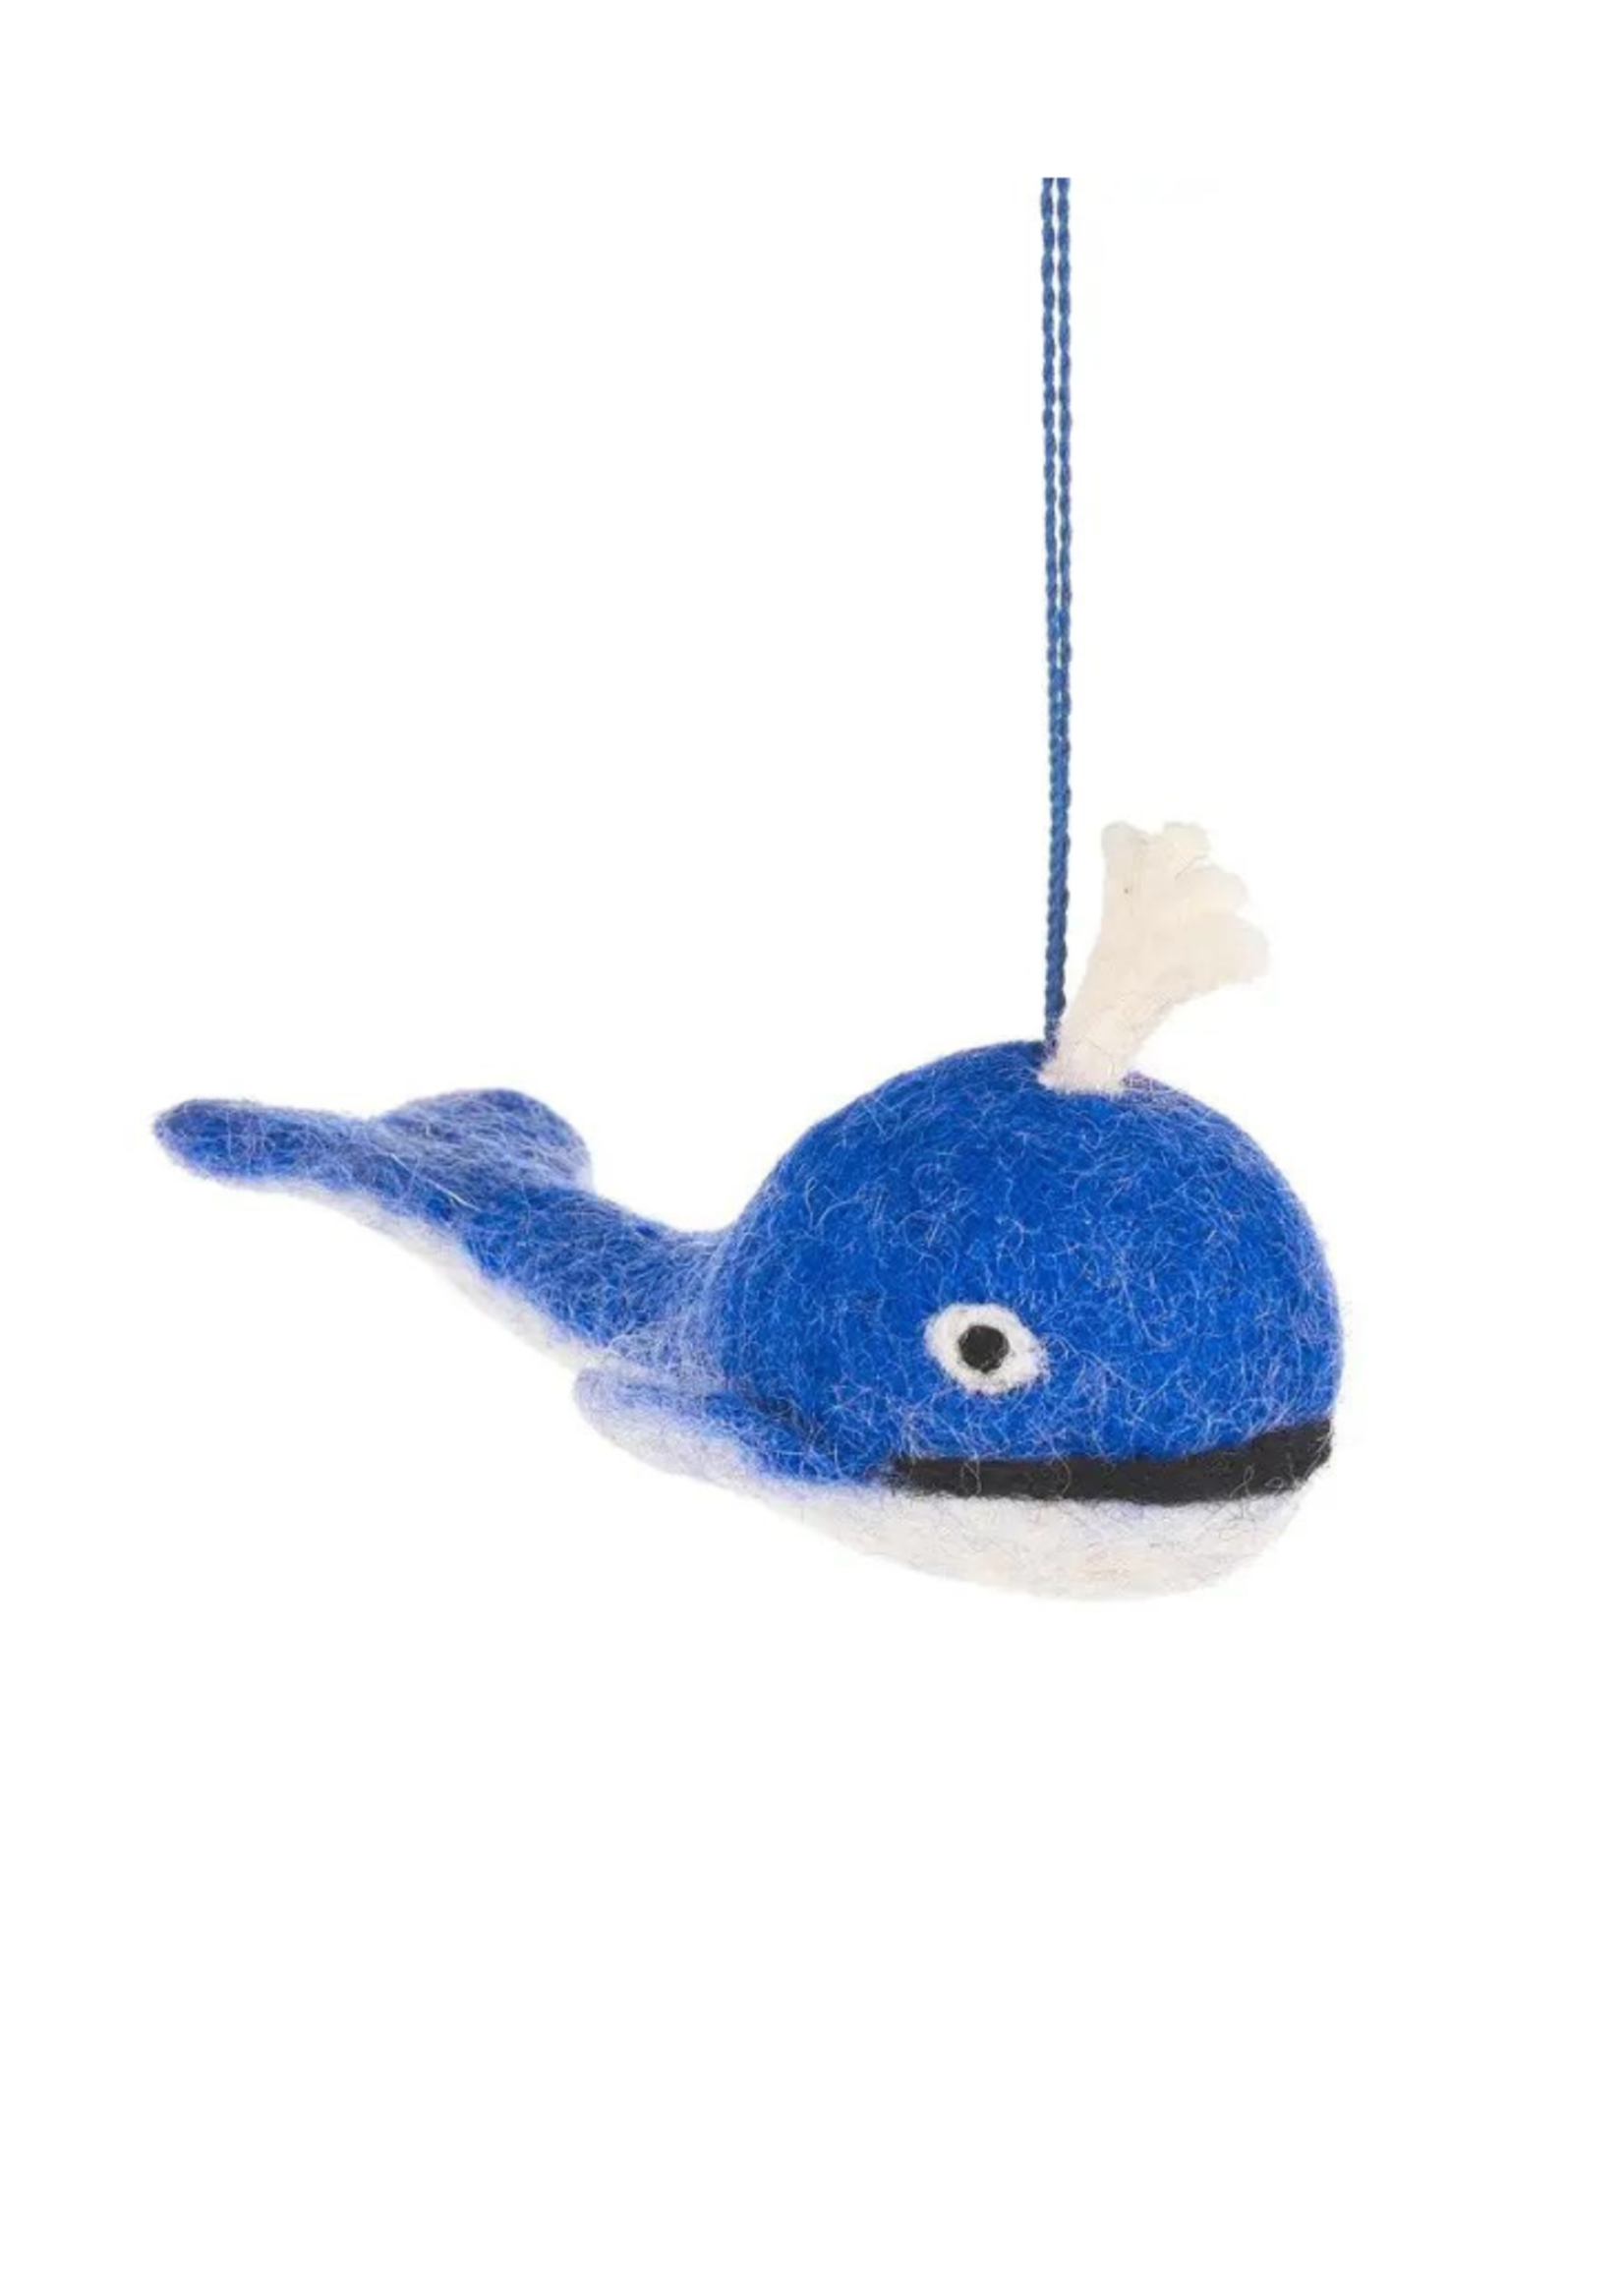 Felt So Good Handmade Felt Biodegradable Blue Whale Ornament